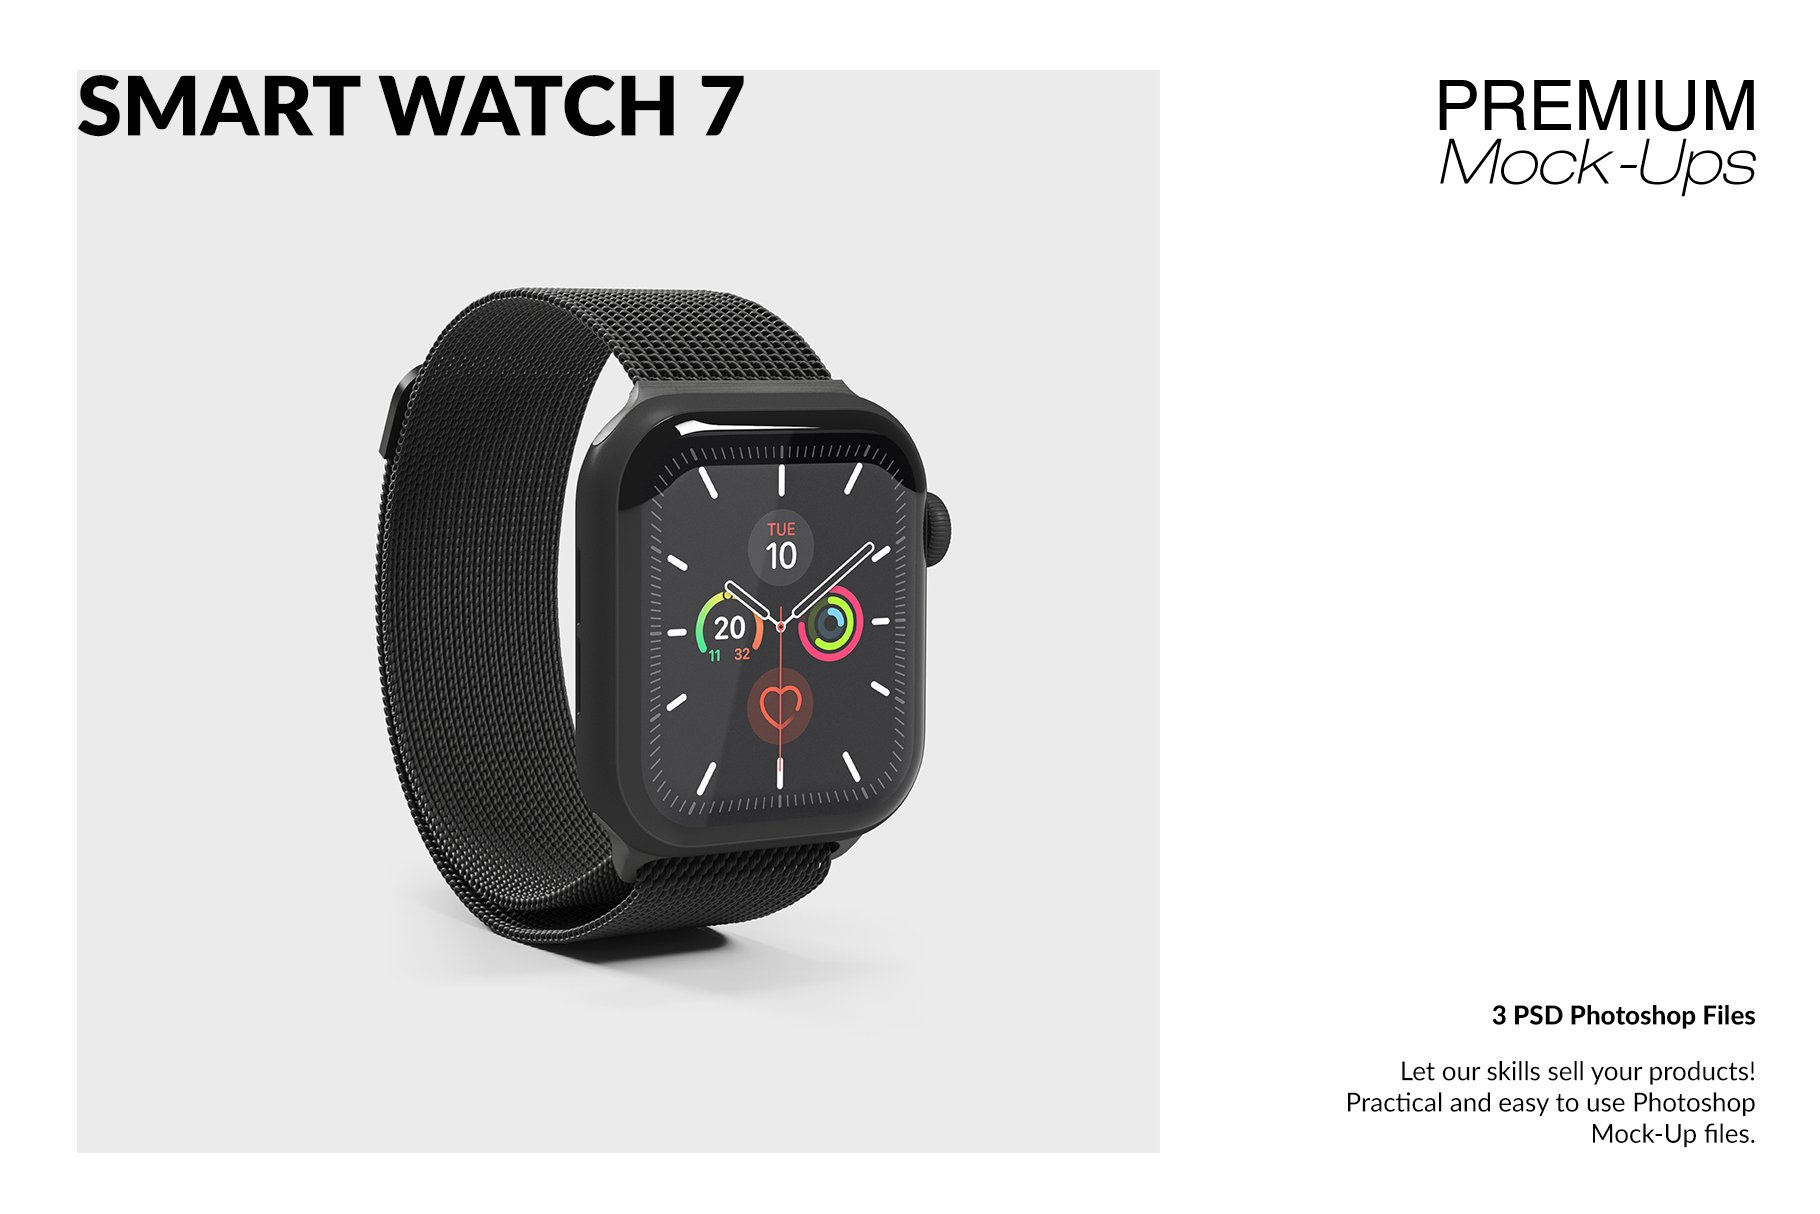 Smart Watch 7 Mockups cover image.